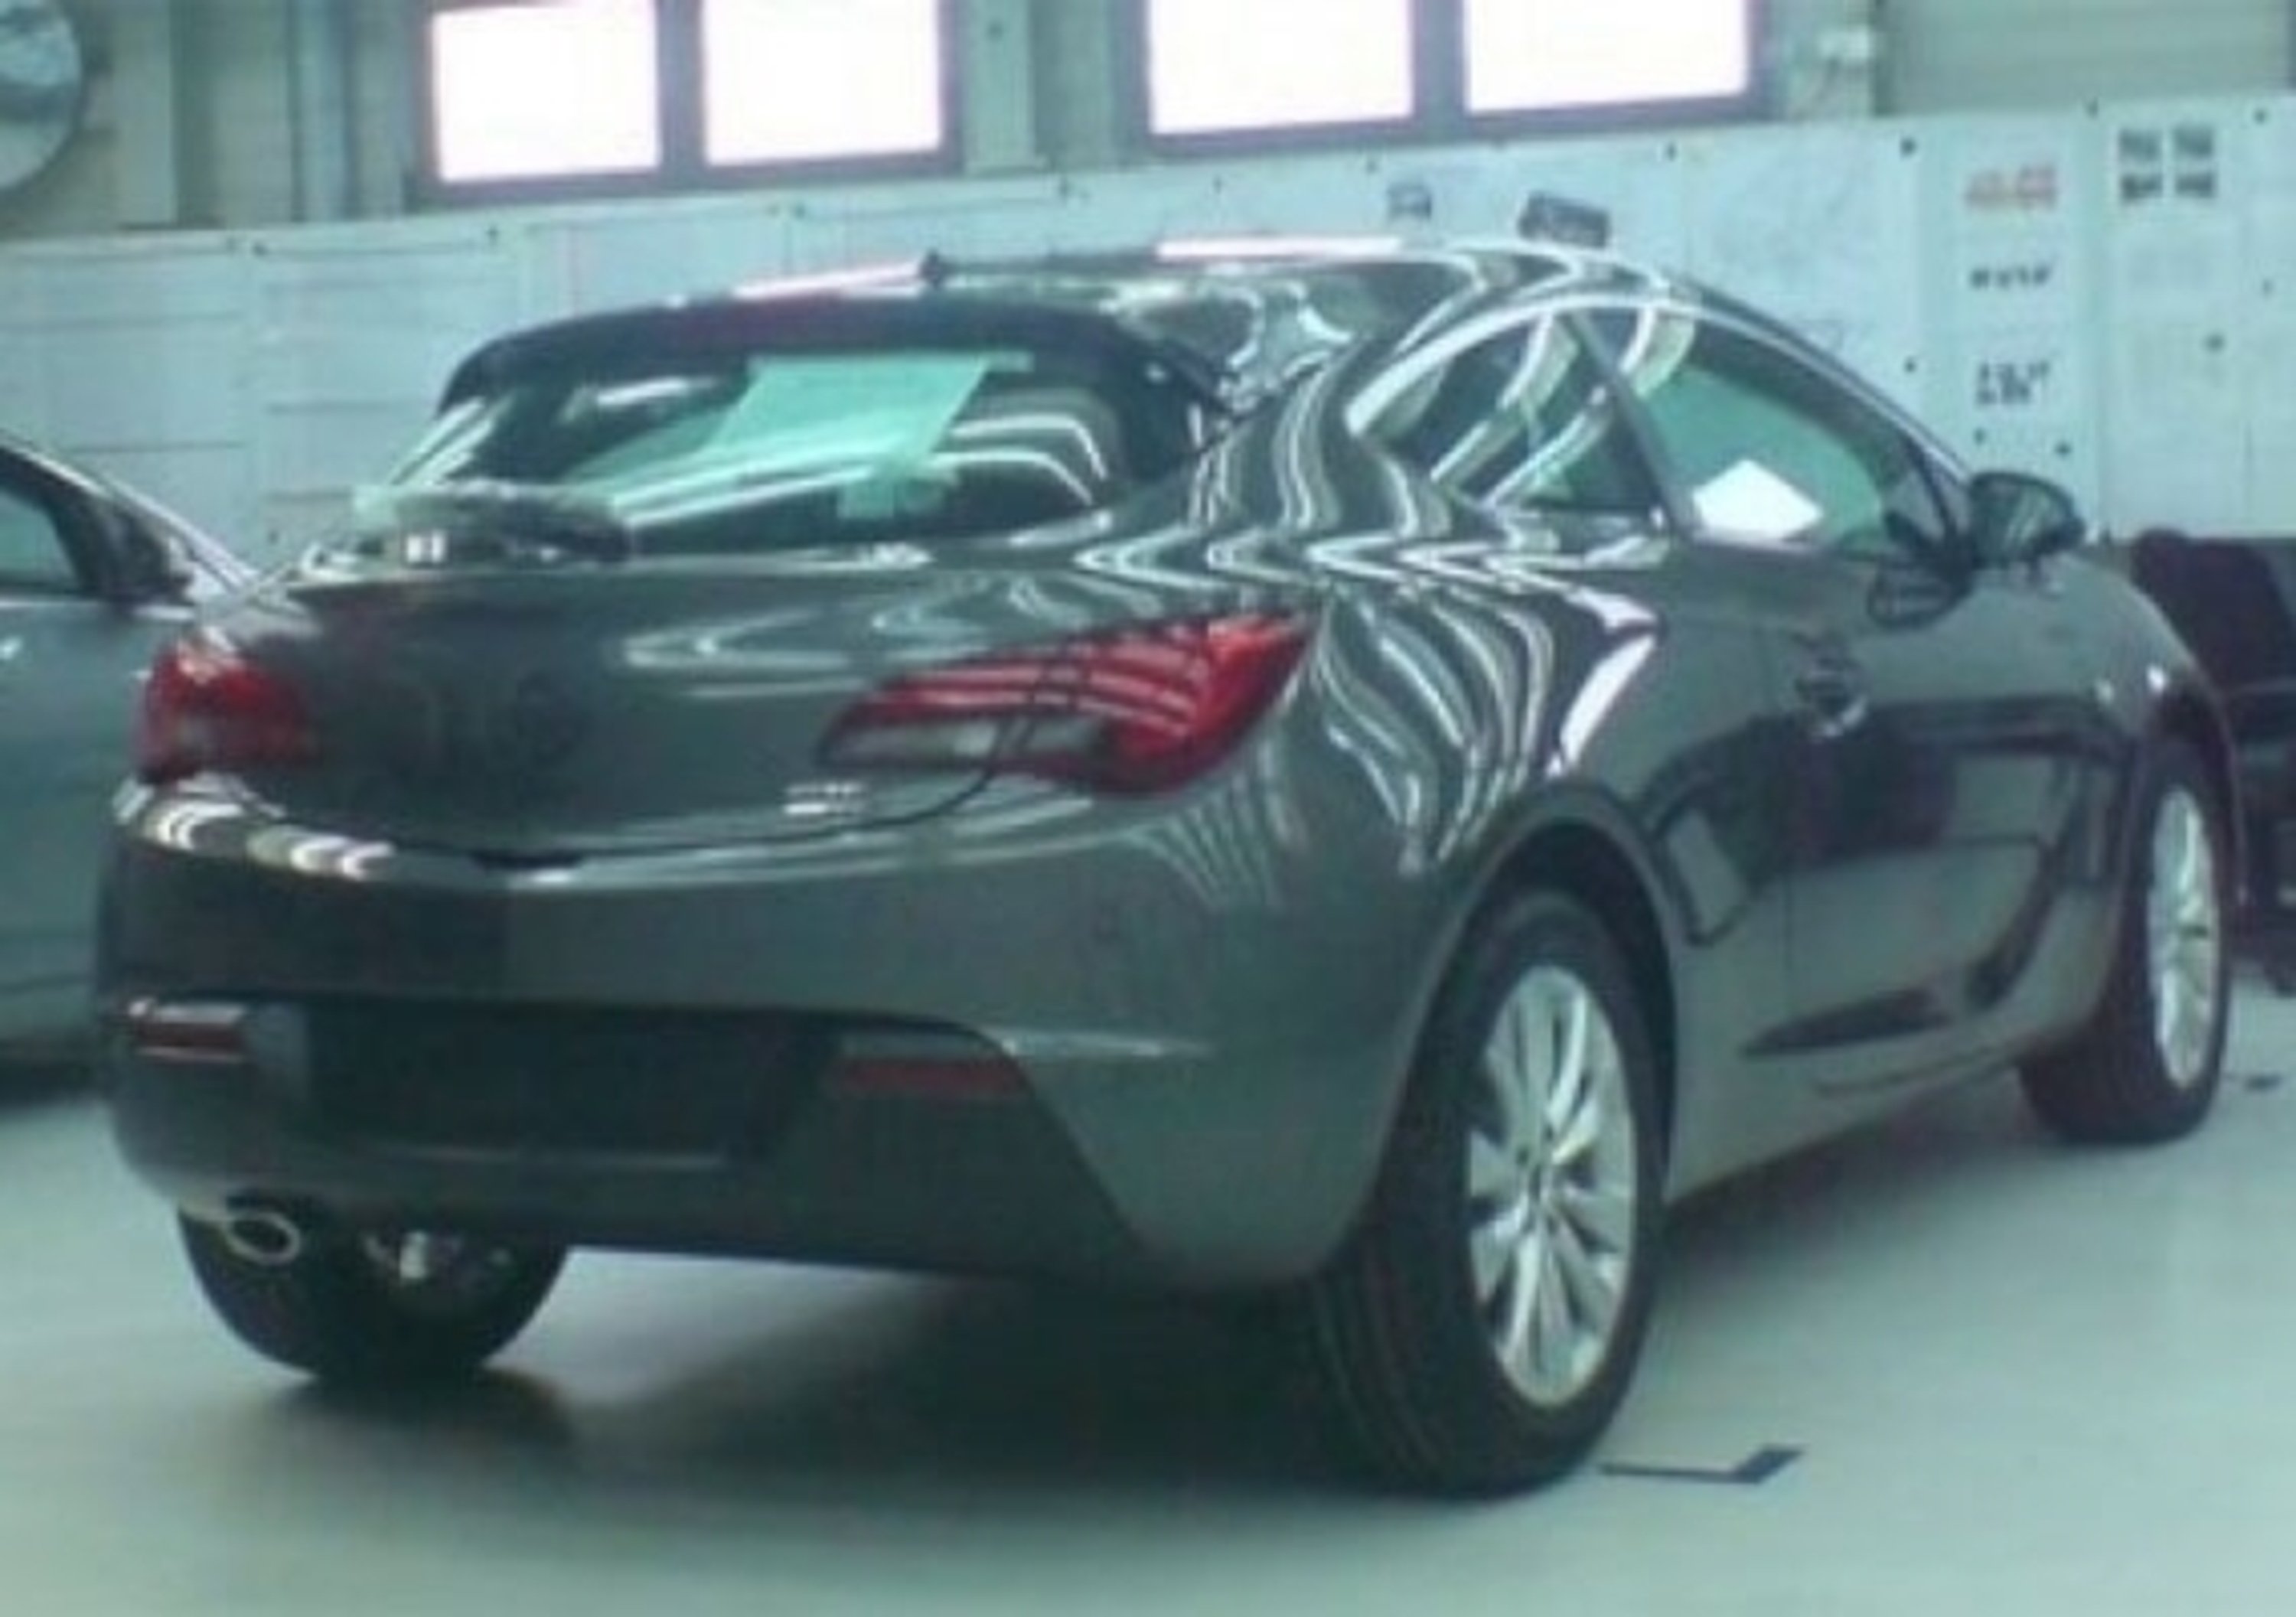 La nuova Opel Astra GTC compare su Facebook